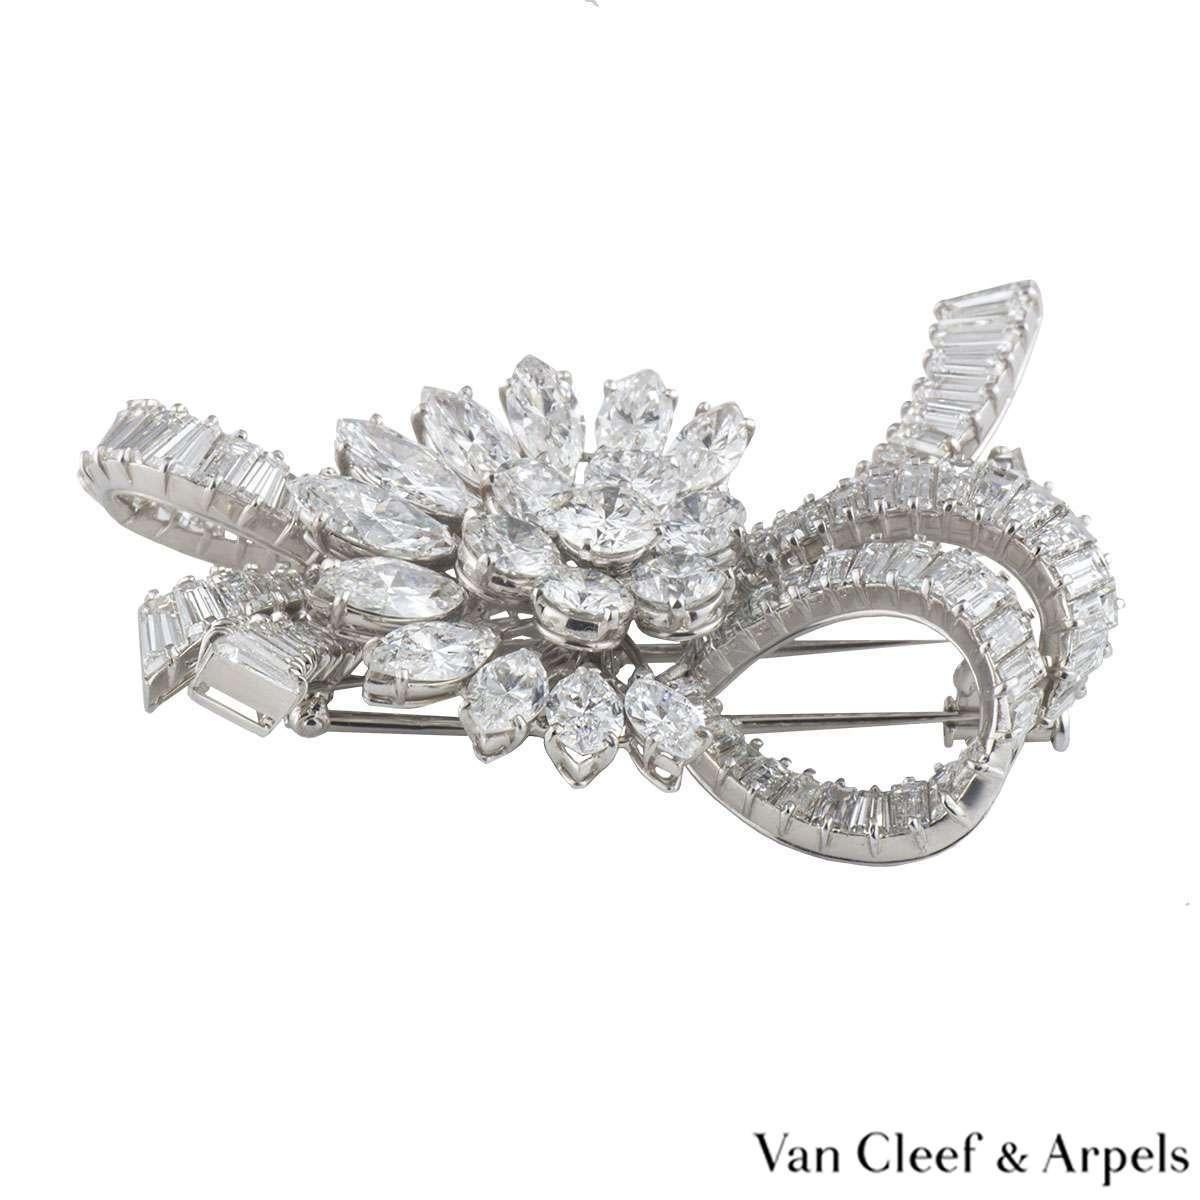 Van Cleef & Arpels Vintage 1950s Diamond Platinum Brooch 14 Carat For Sale 1